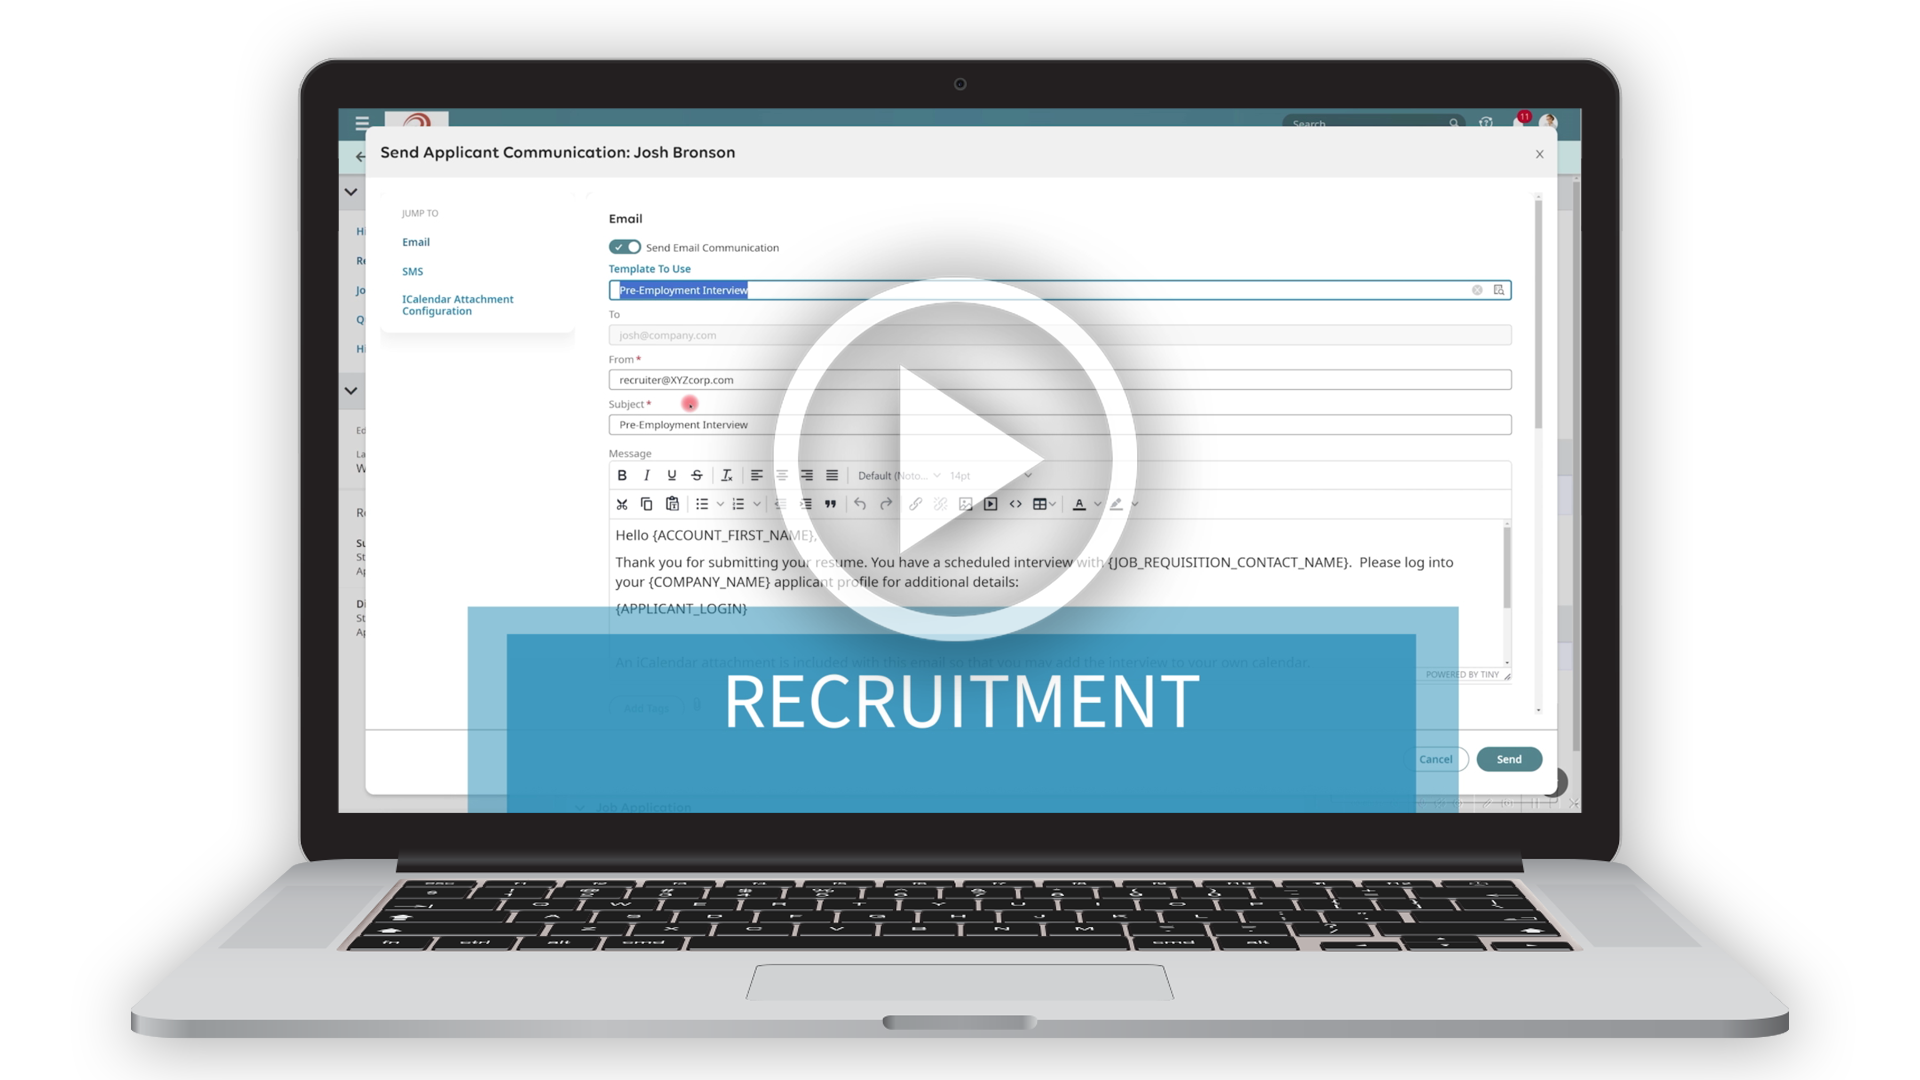 Recruitment Software Demo Video Thumbnail Image